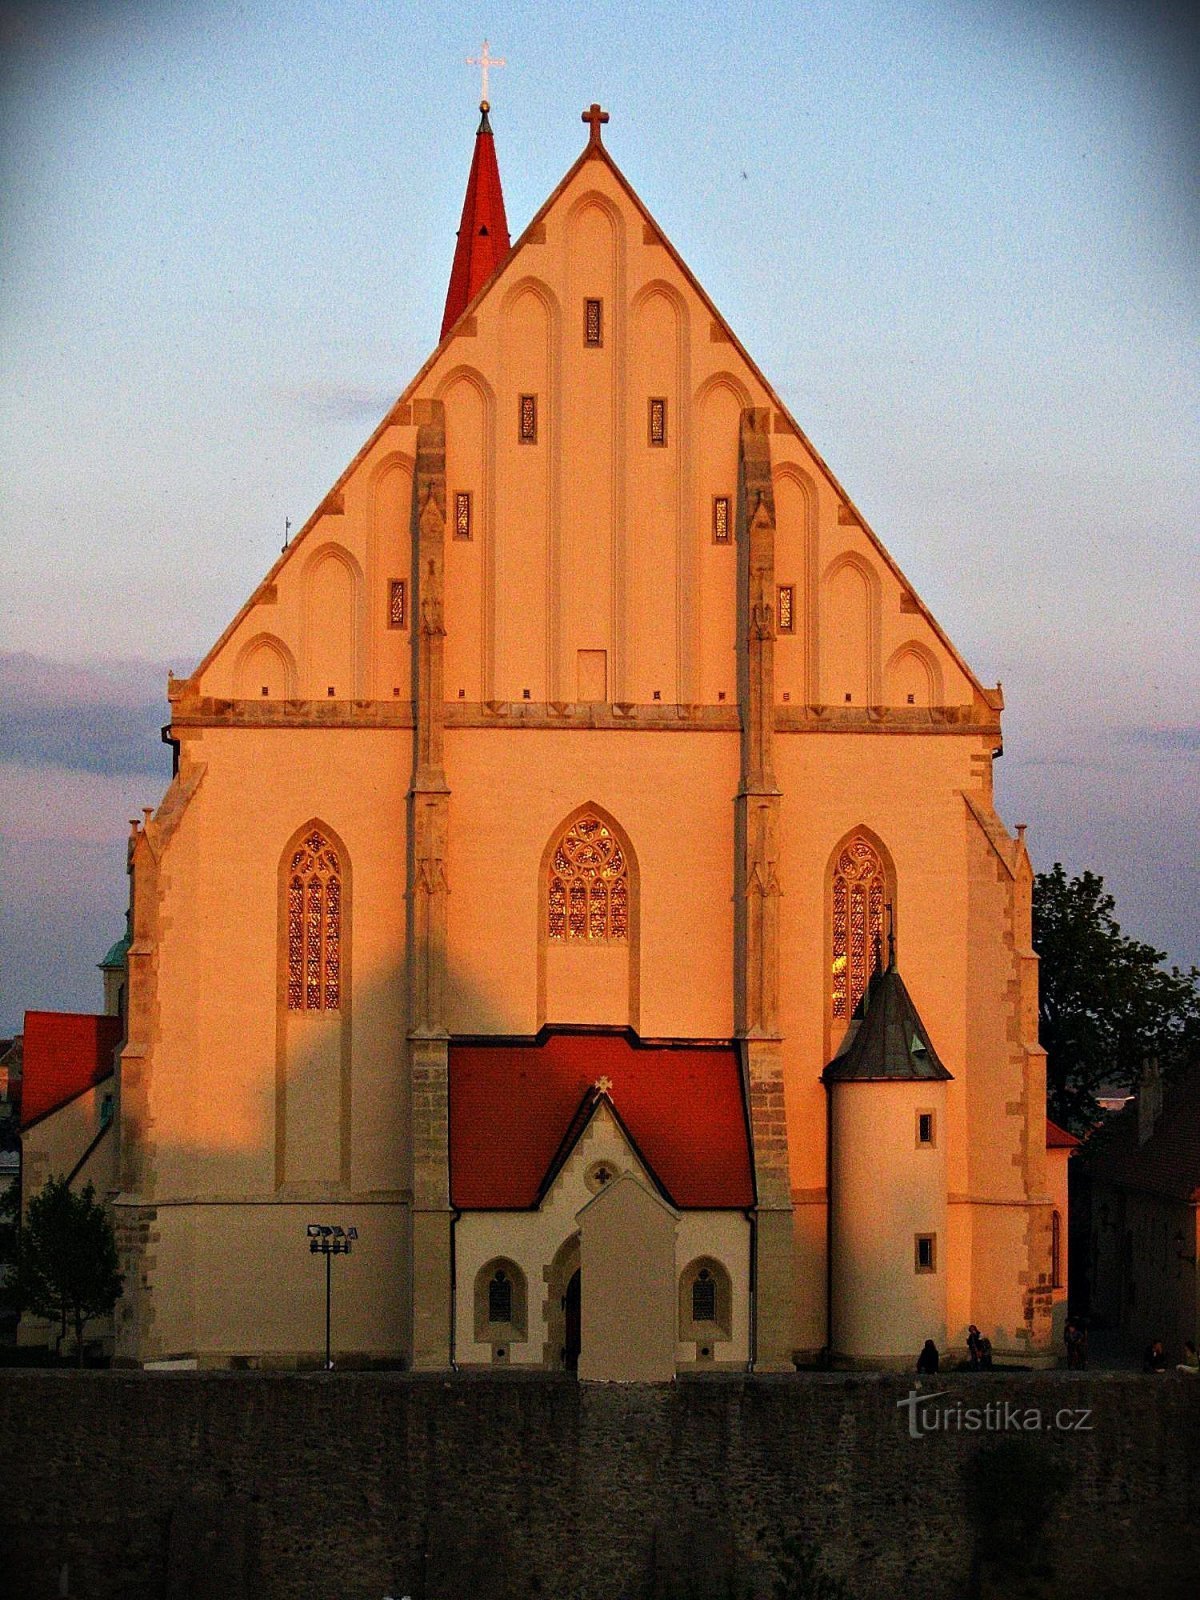 The most beautiful church in Znojmo